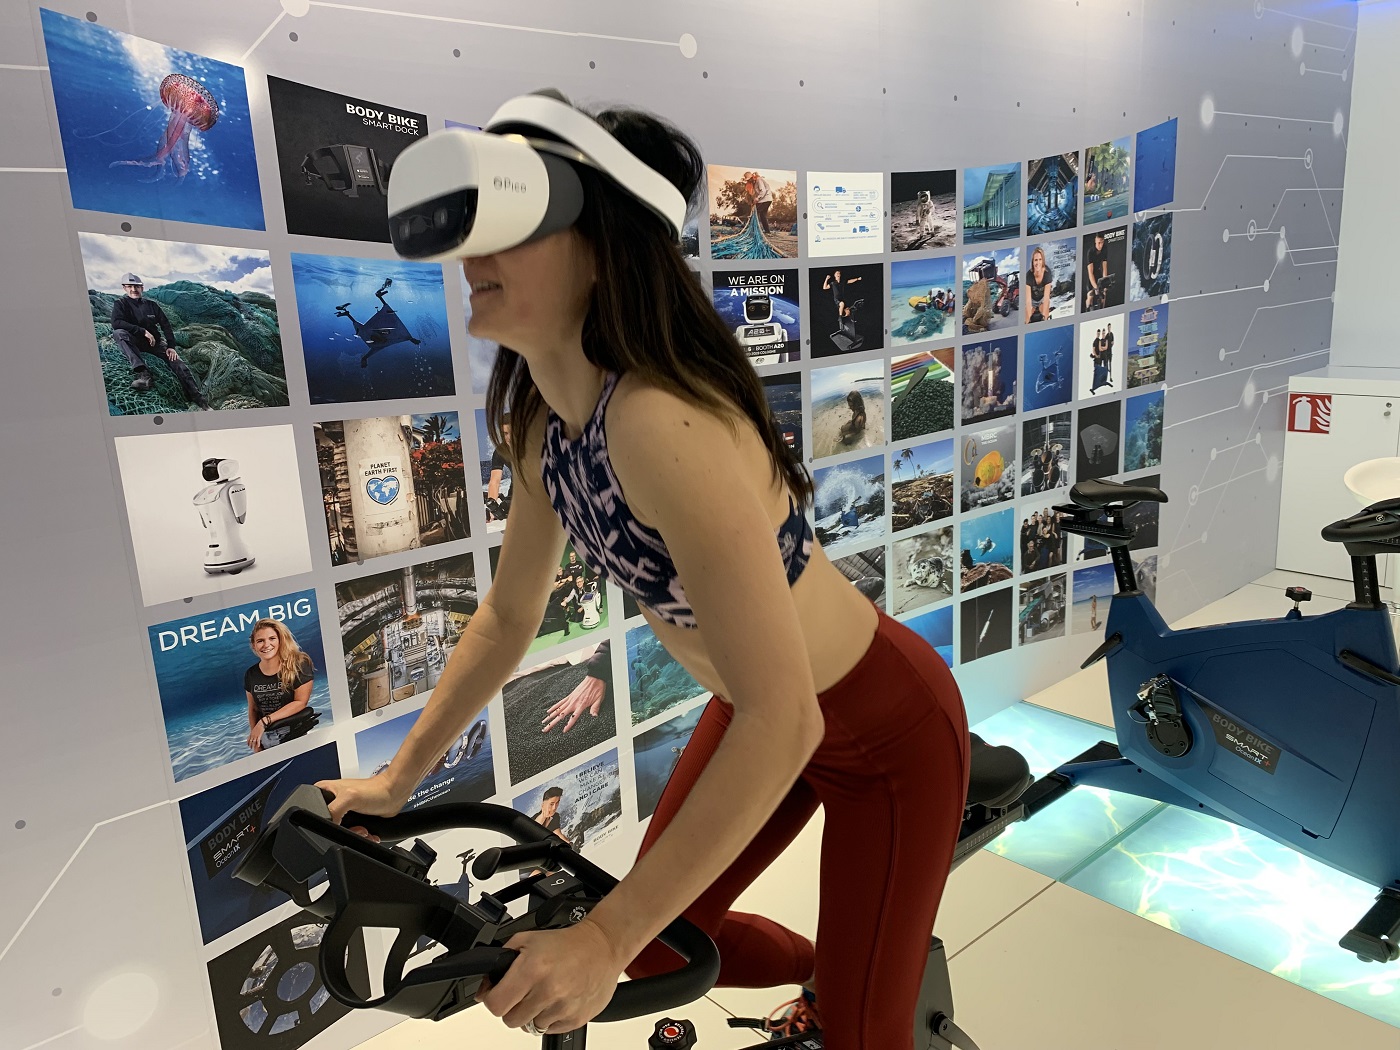 holodia’s holofit VR fitness